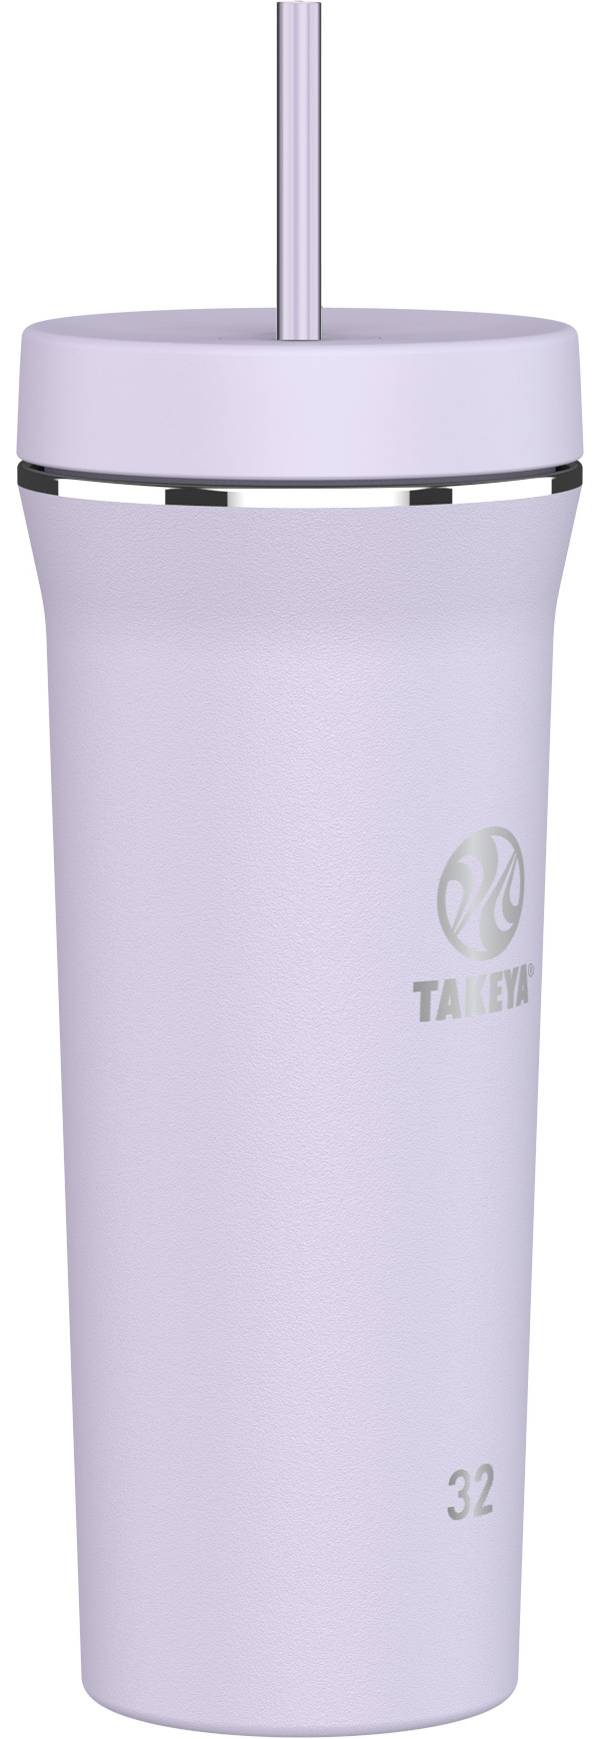 Takeya 32 oz. Insulated Straw Tumbler product image